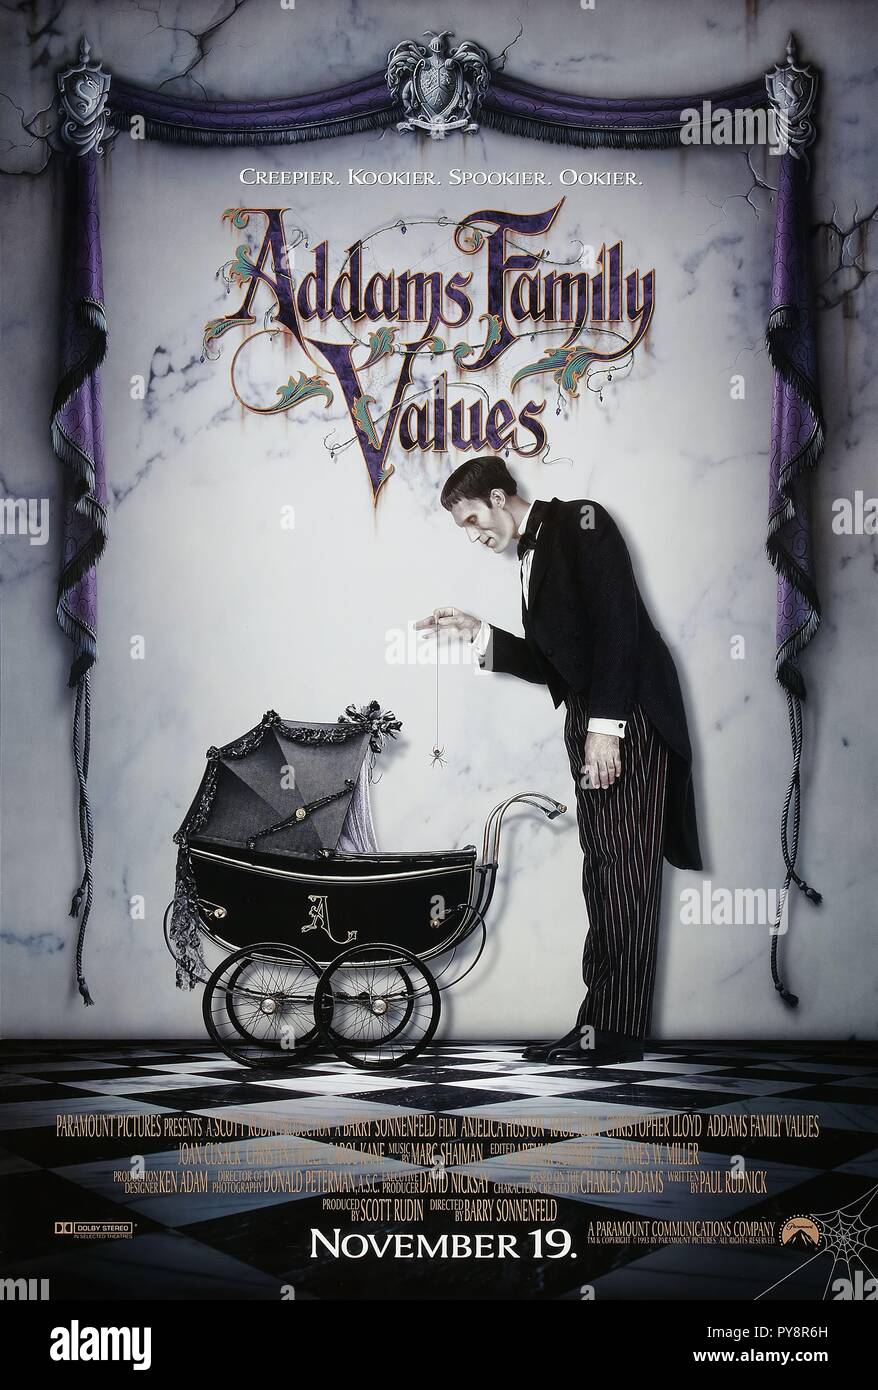 La Famille Addams & Les valeurs de la Famille Addams